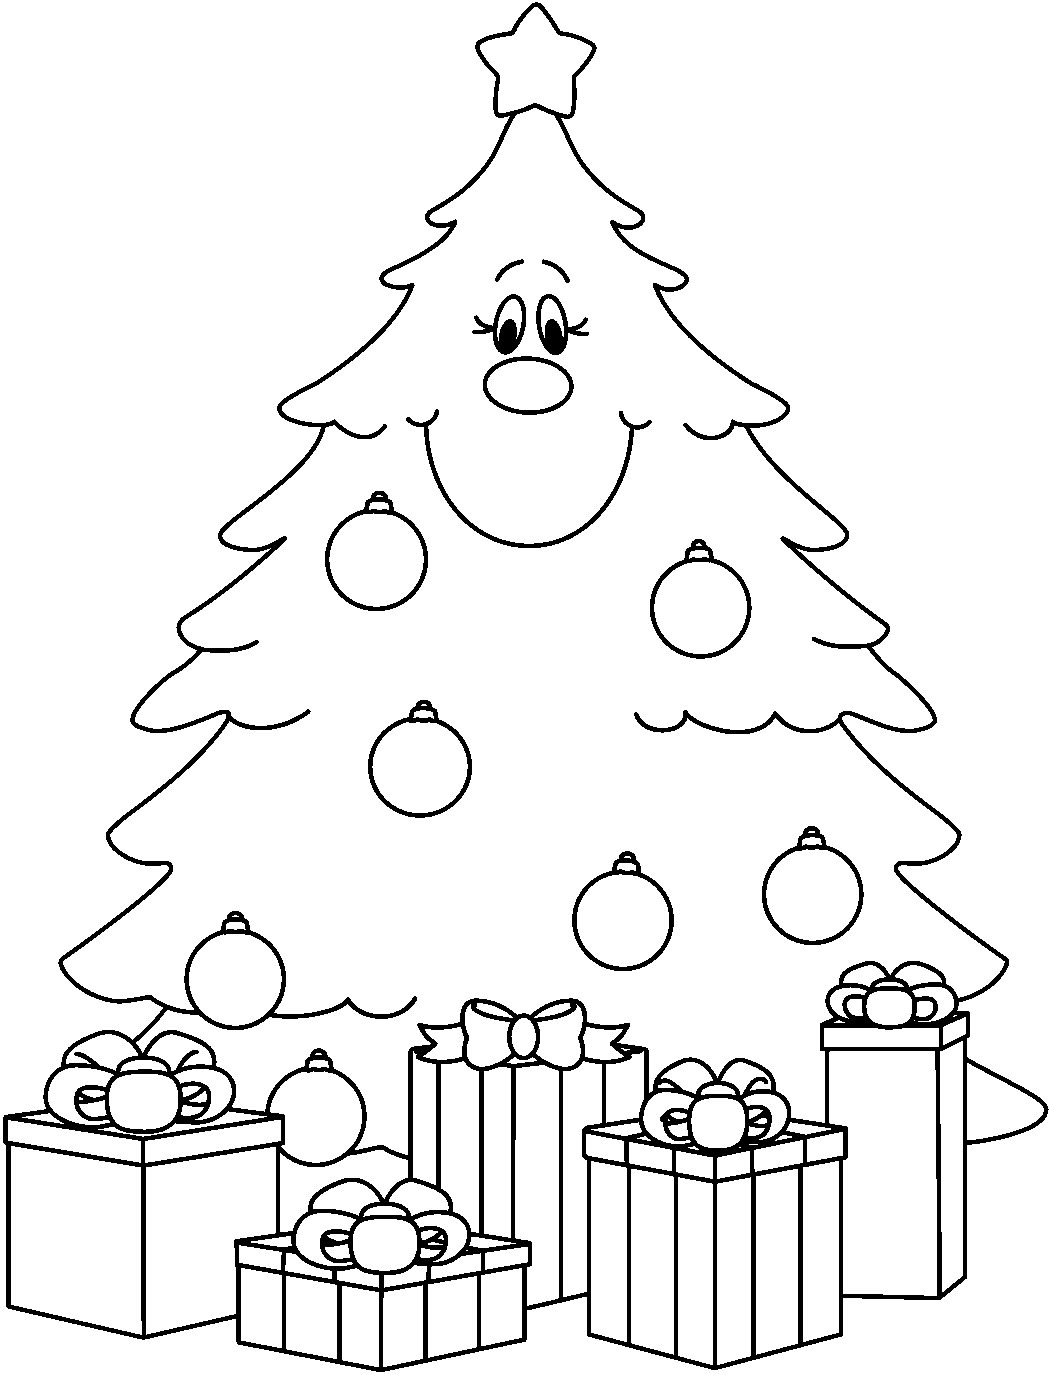 Árvore de Natal para imprimir e colorir ~ Pinturas do AUwe